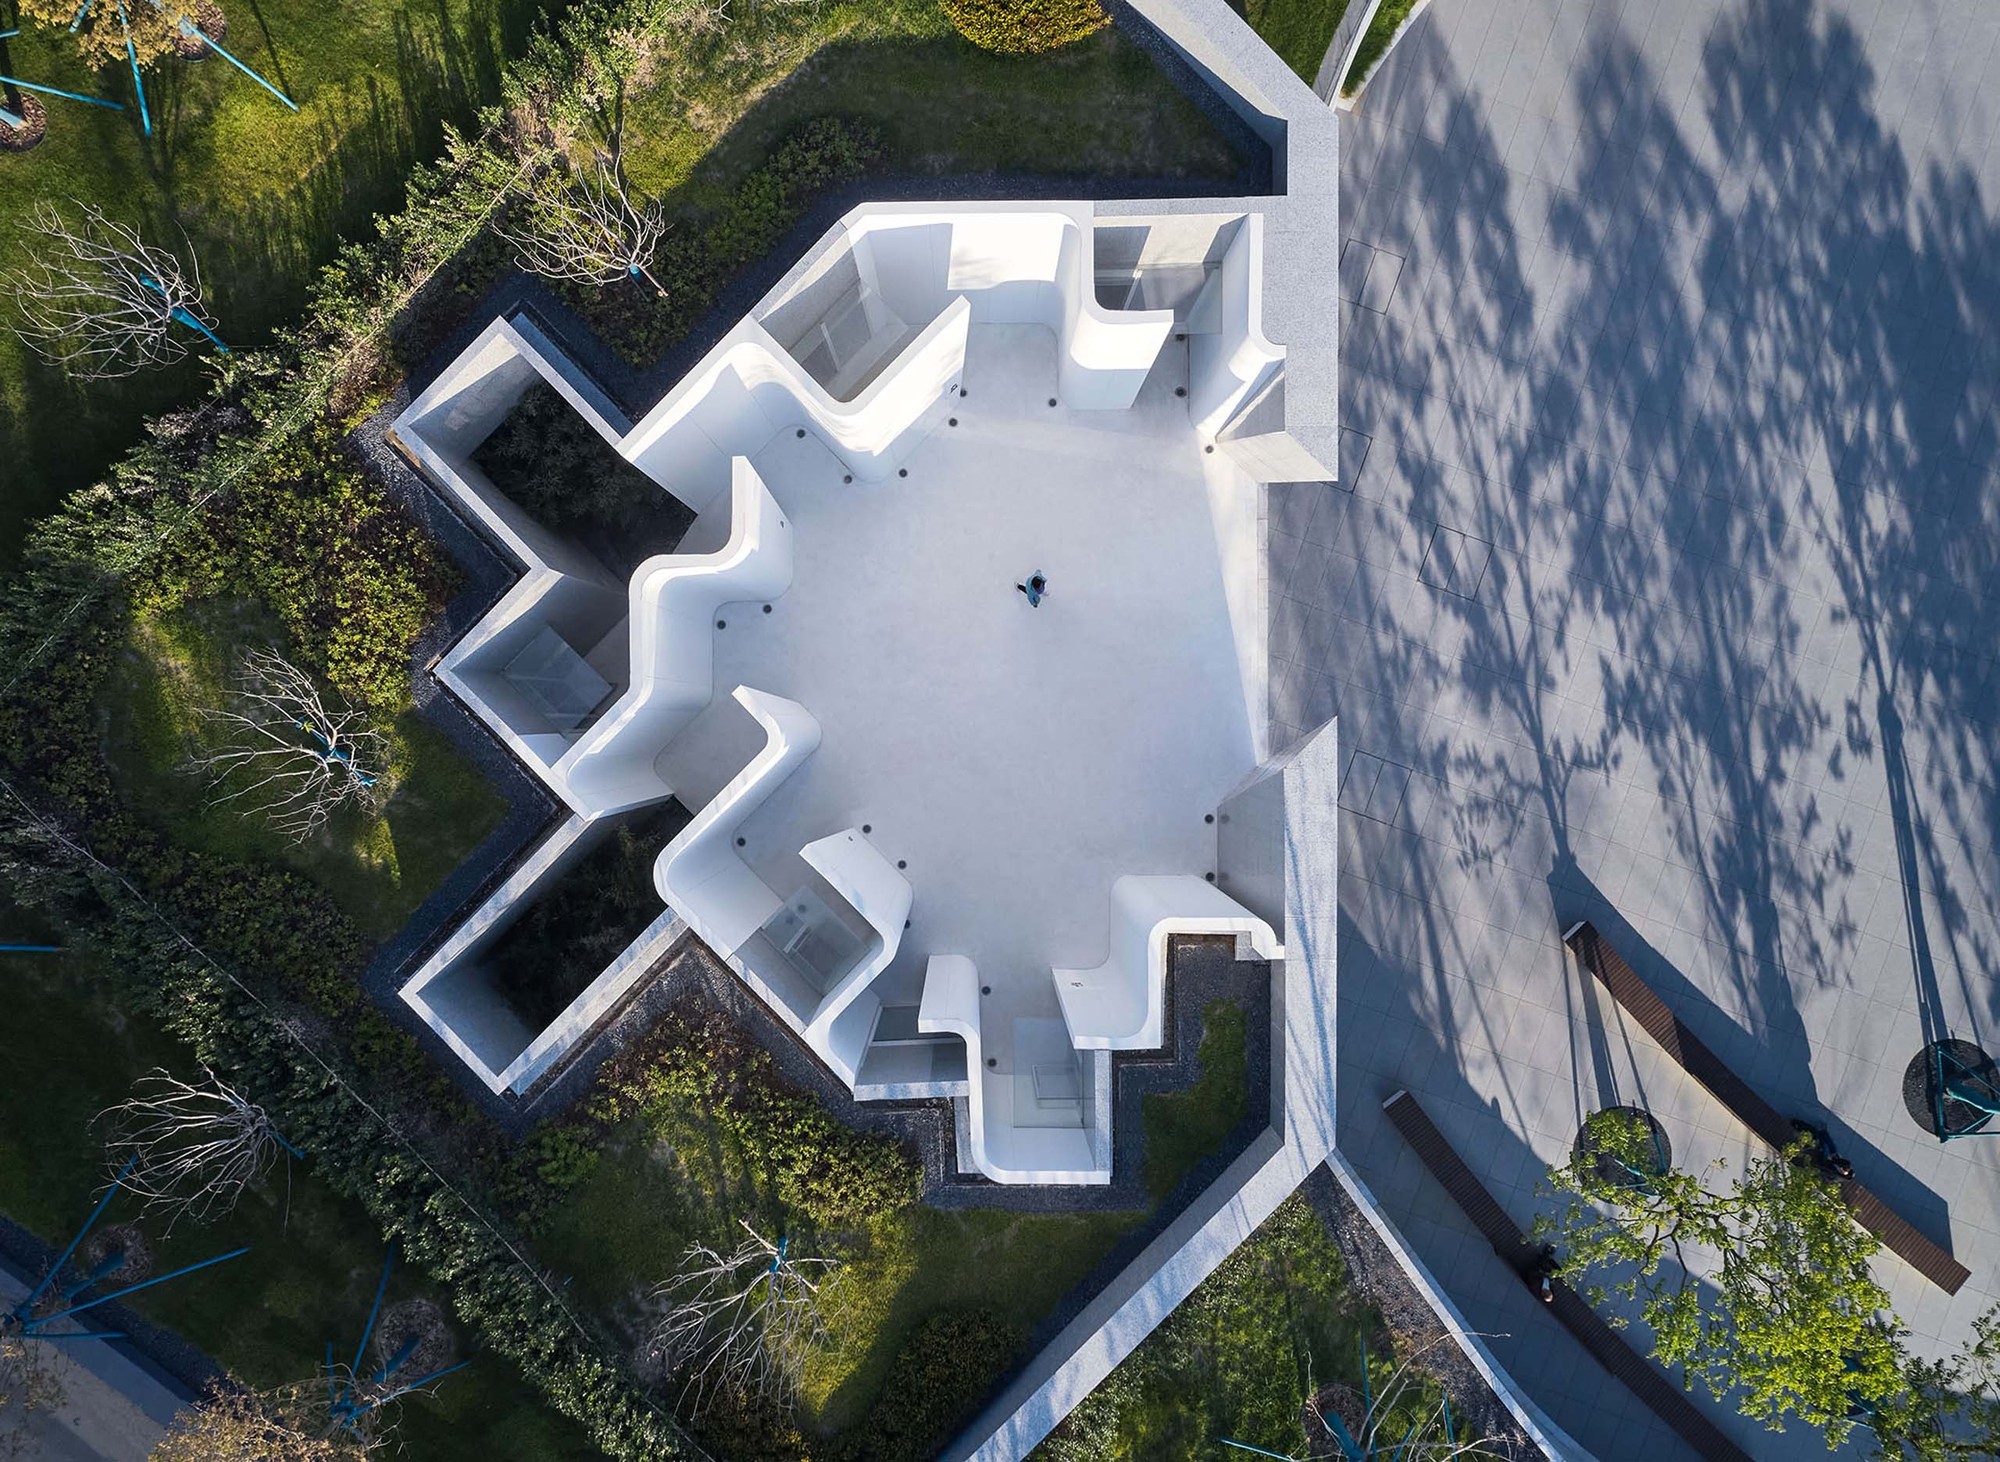  GN Architect Designed Public Toilets Inside the Hillsides of China Tourism Village